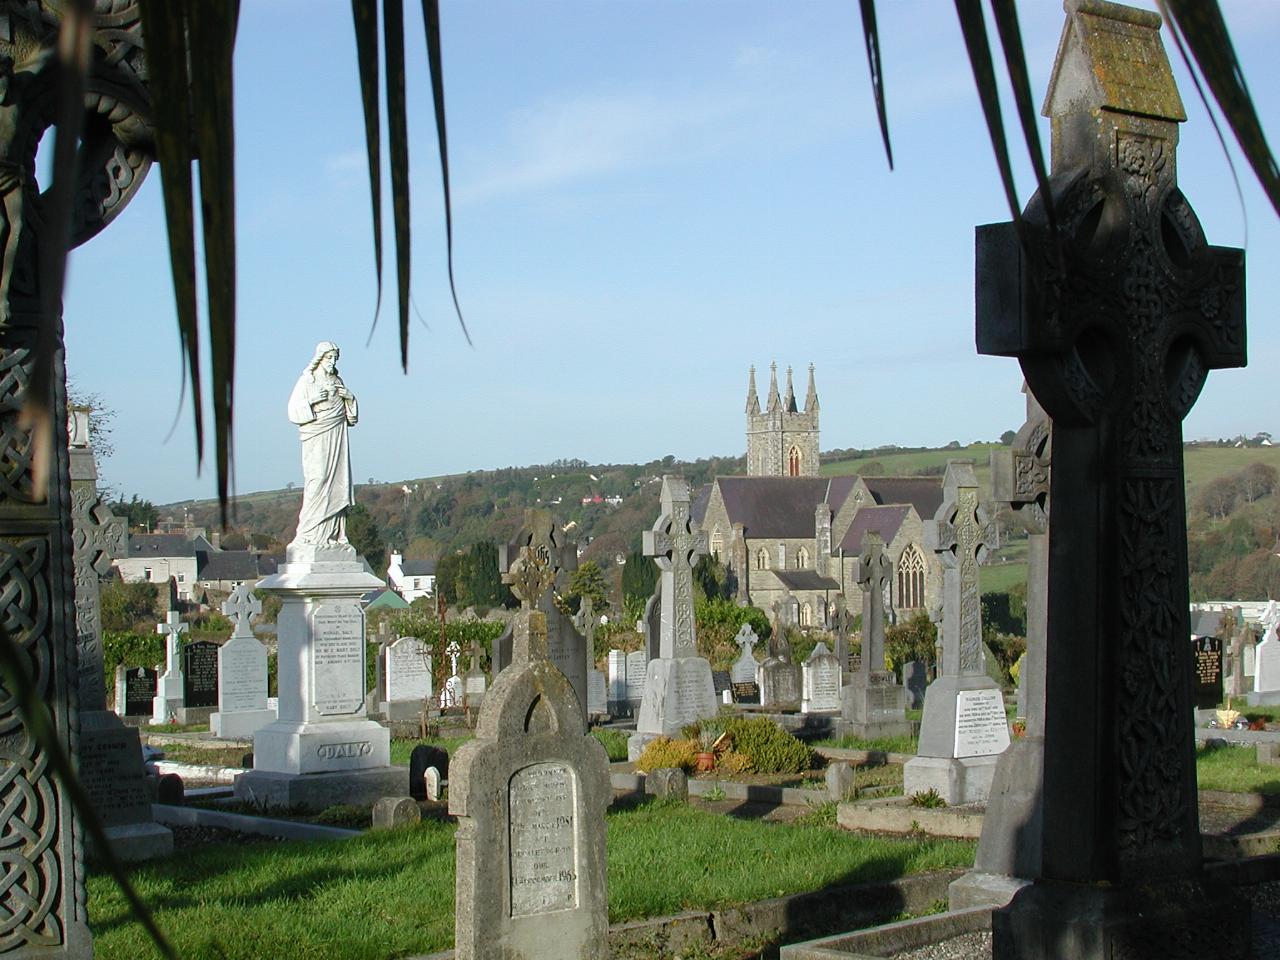 Cemetery at St. Patrick's Church, Bandon